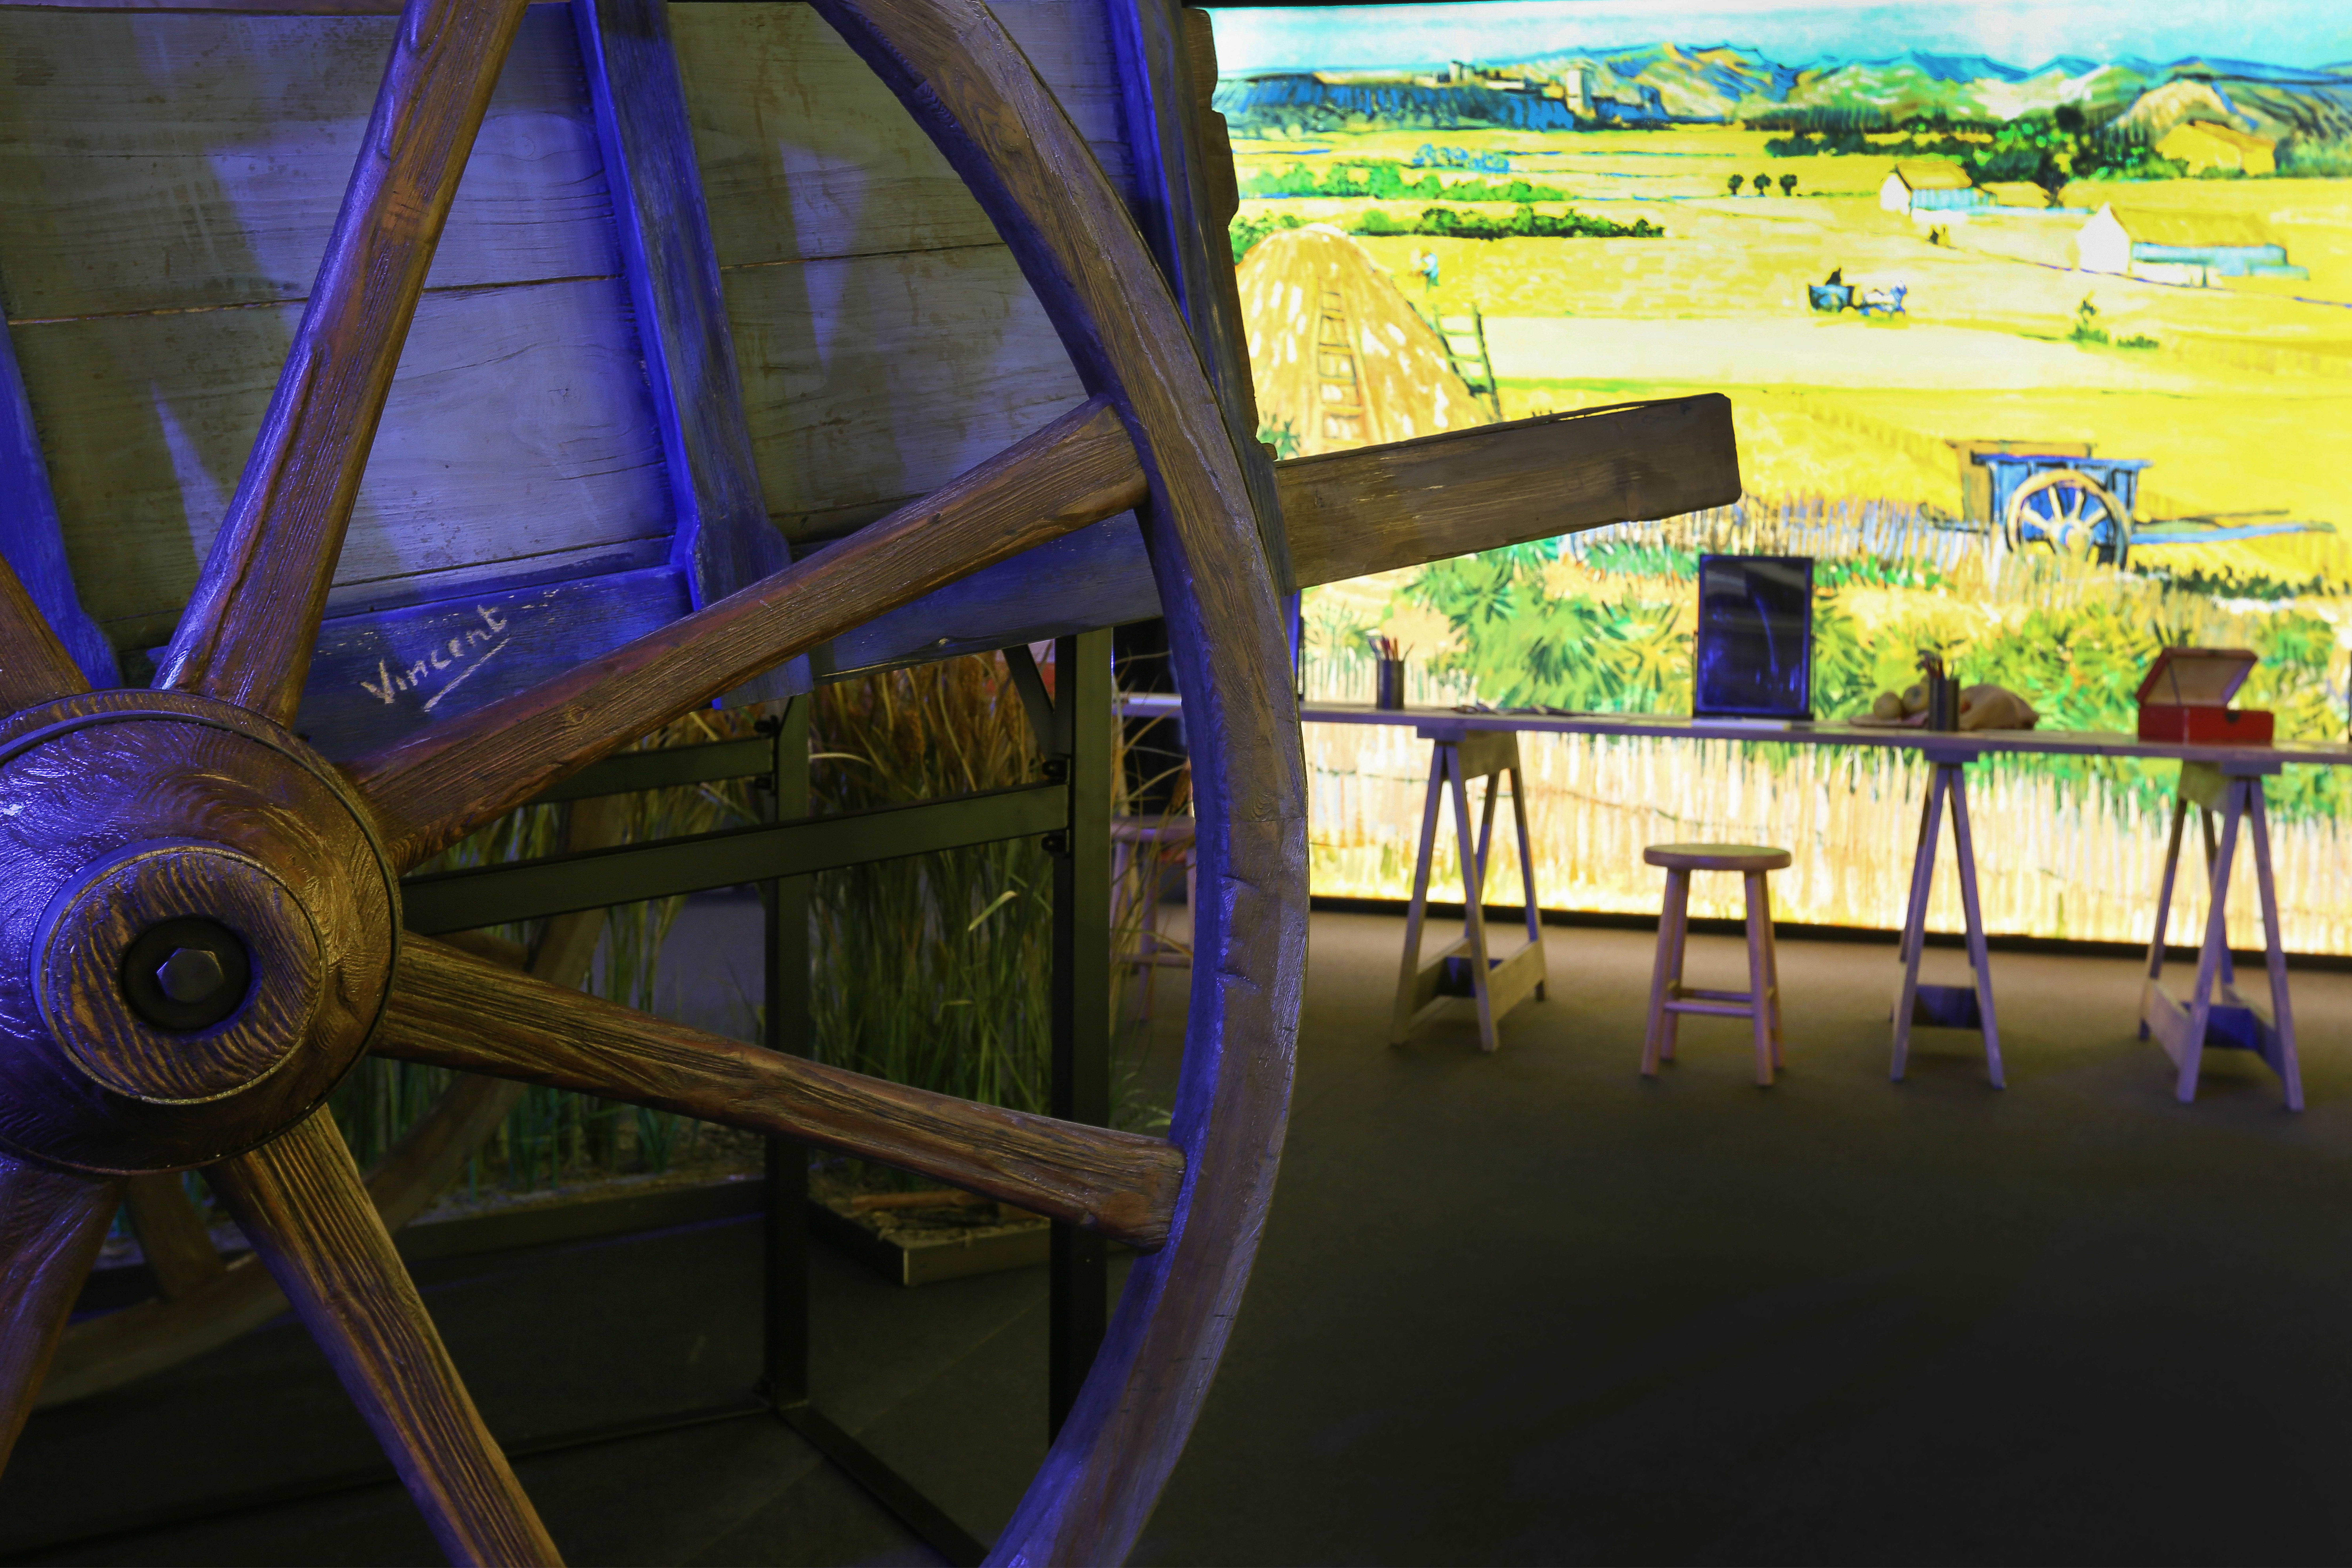 Imagine Van Gogh, Exhibition, la Grande halle de la Villette, Paris: 23rd of June – 10th of September 2017